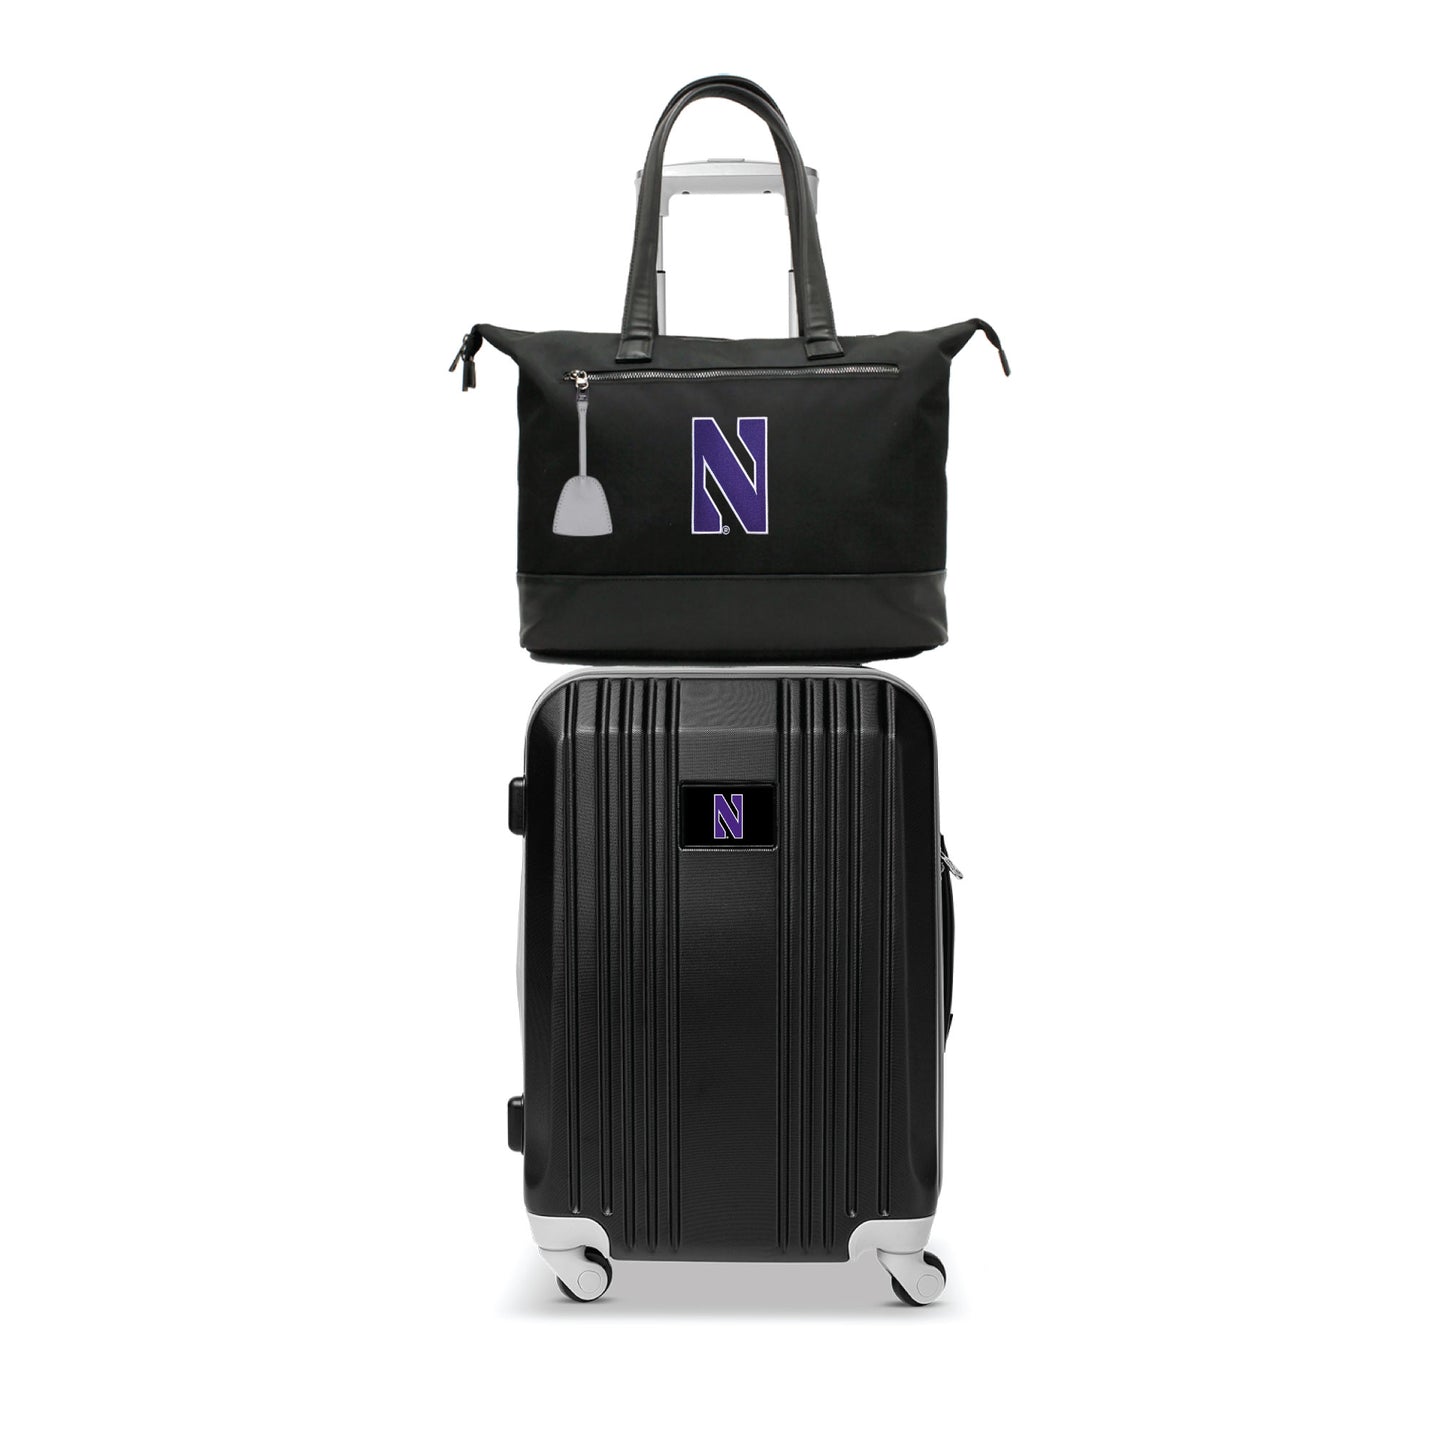 Northwestern Premium Laptop Tote Bag and Luggage Set